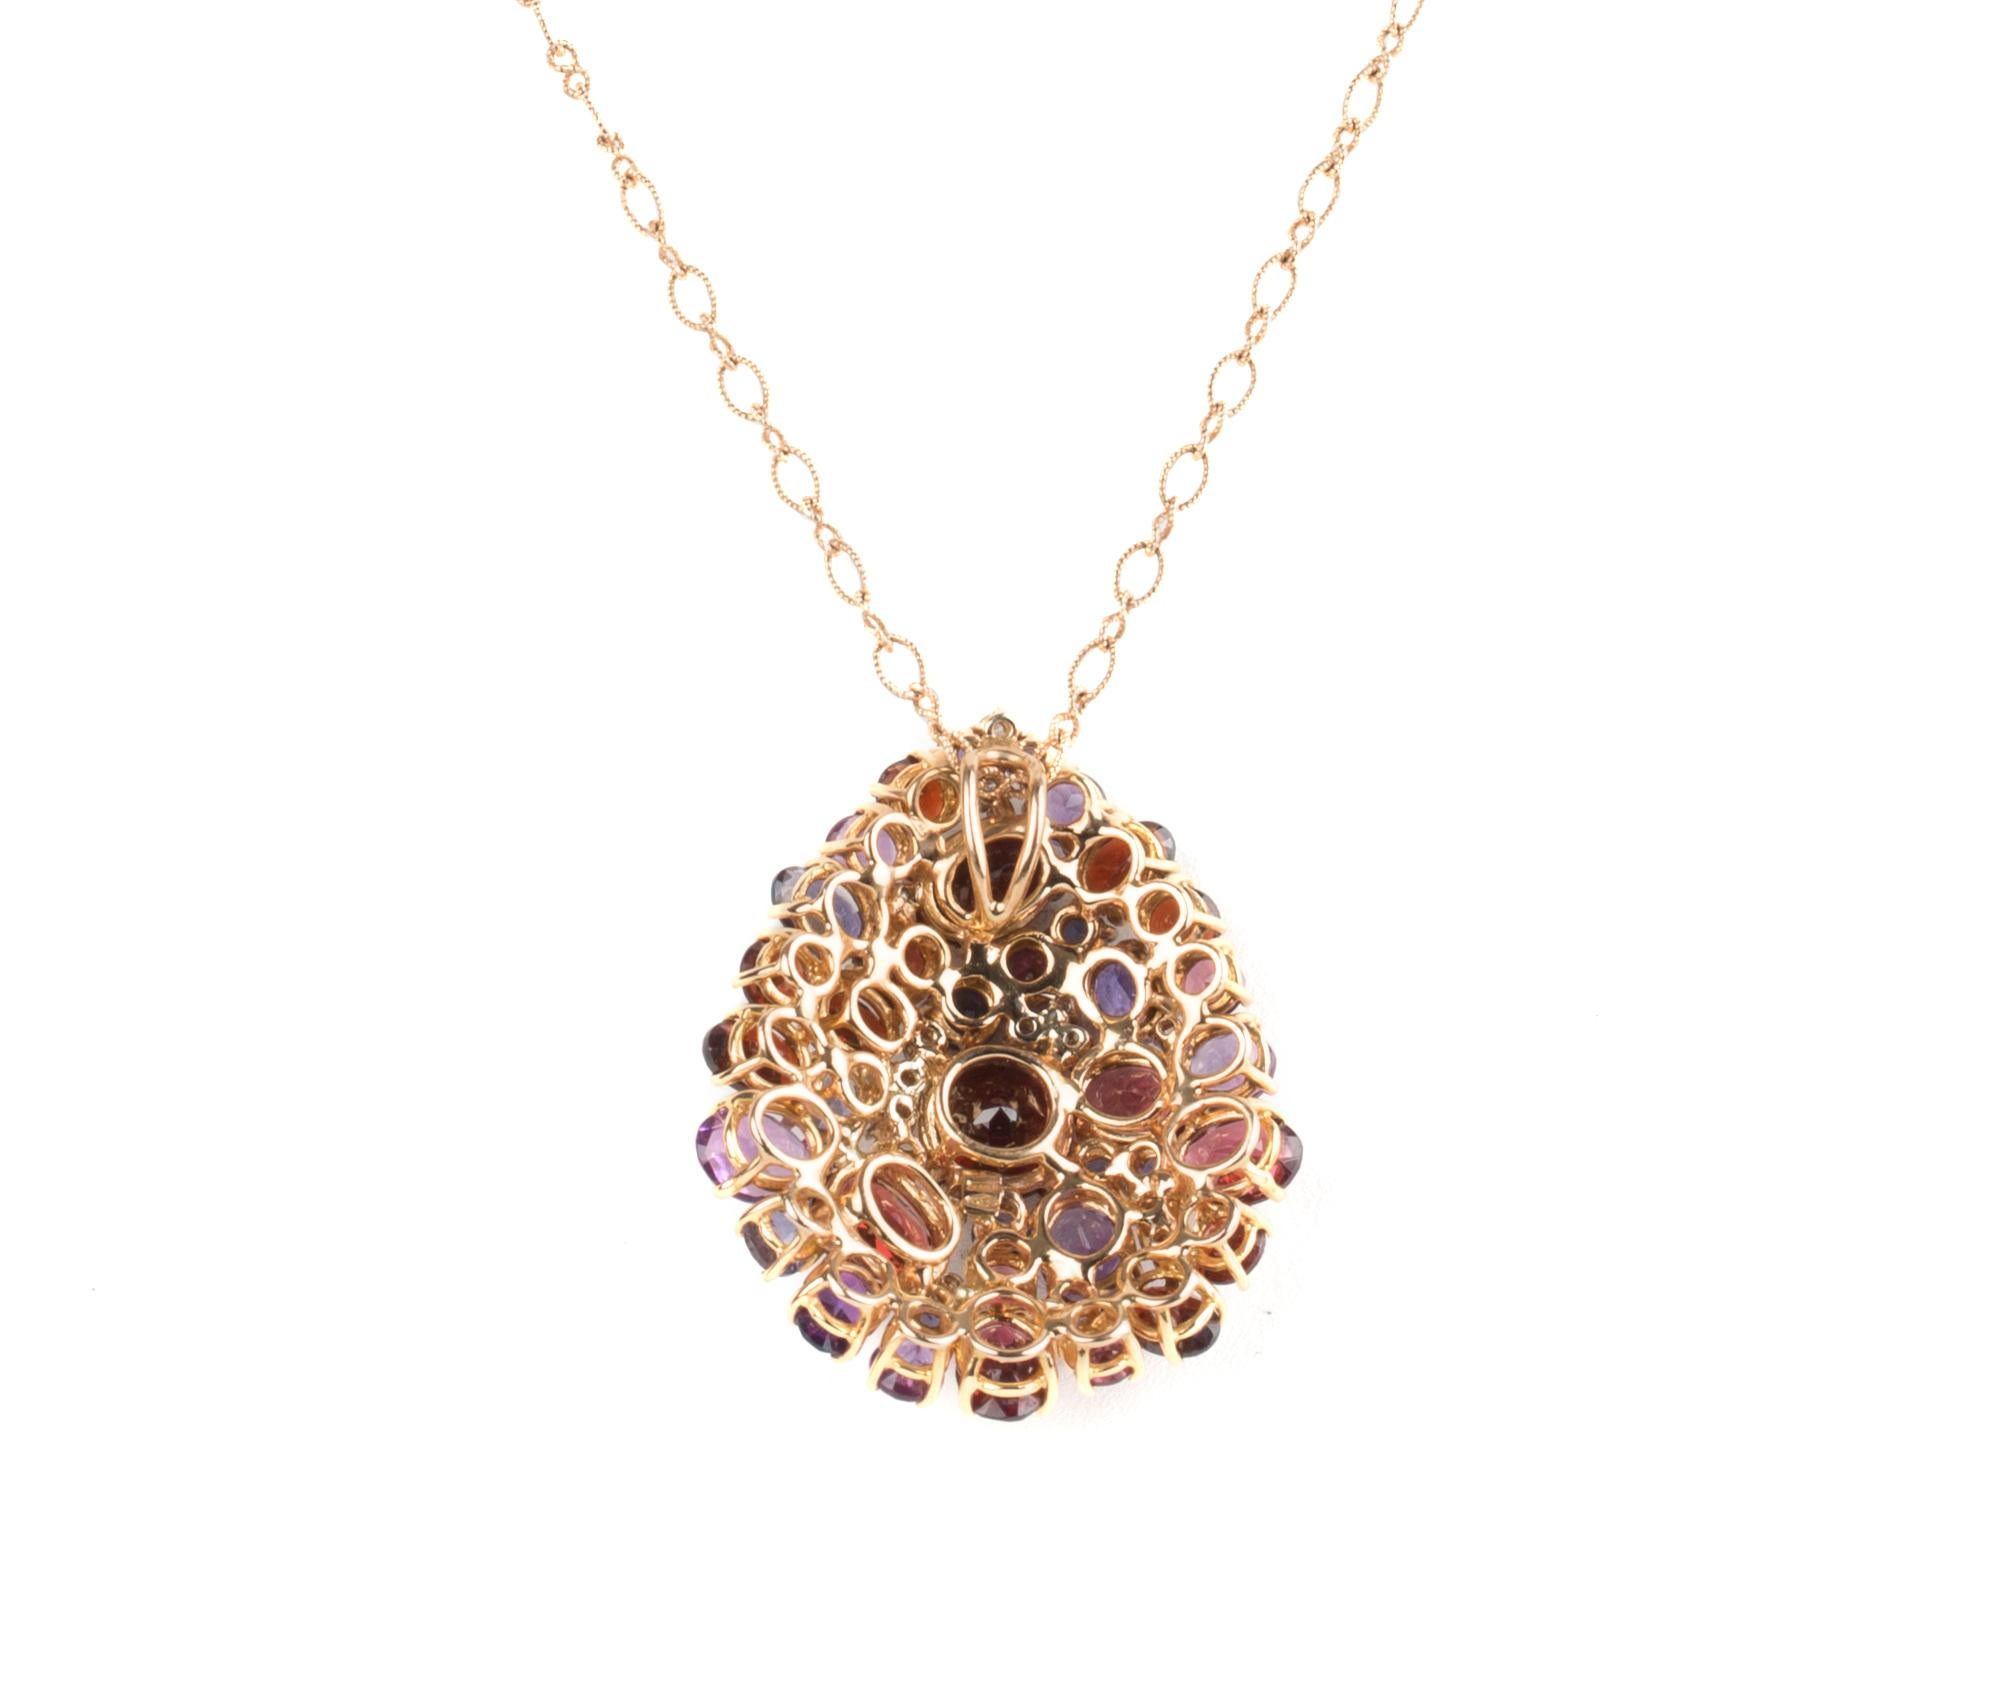 The pendant features a mixture of gemstones: Amethysts, Iolites, Garnets and Diamonds .
17 Carat Gemstones and 0.33 Carat of Diamonds set in 18 Karat Rose Gold.